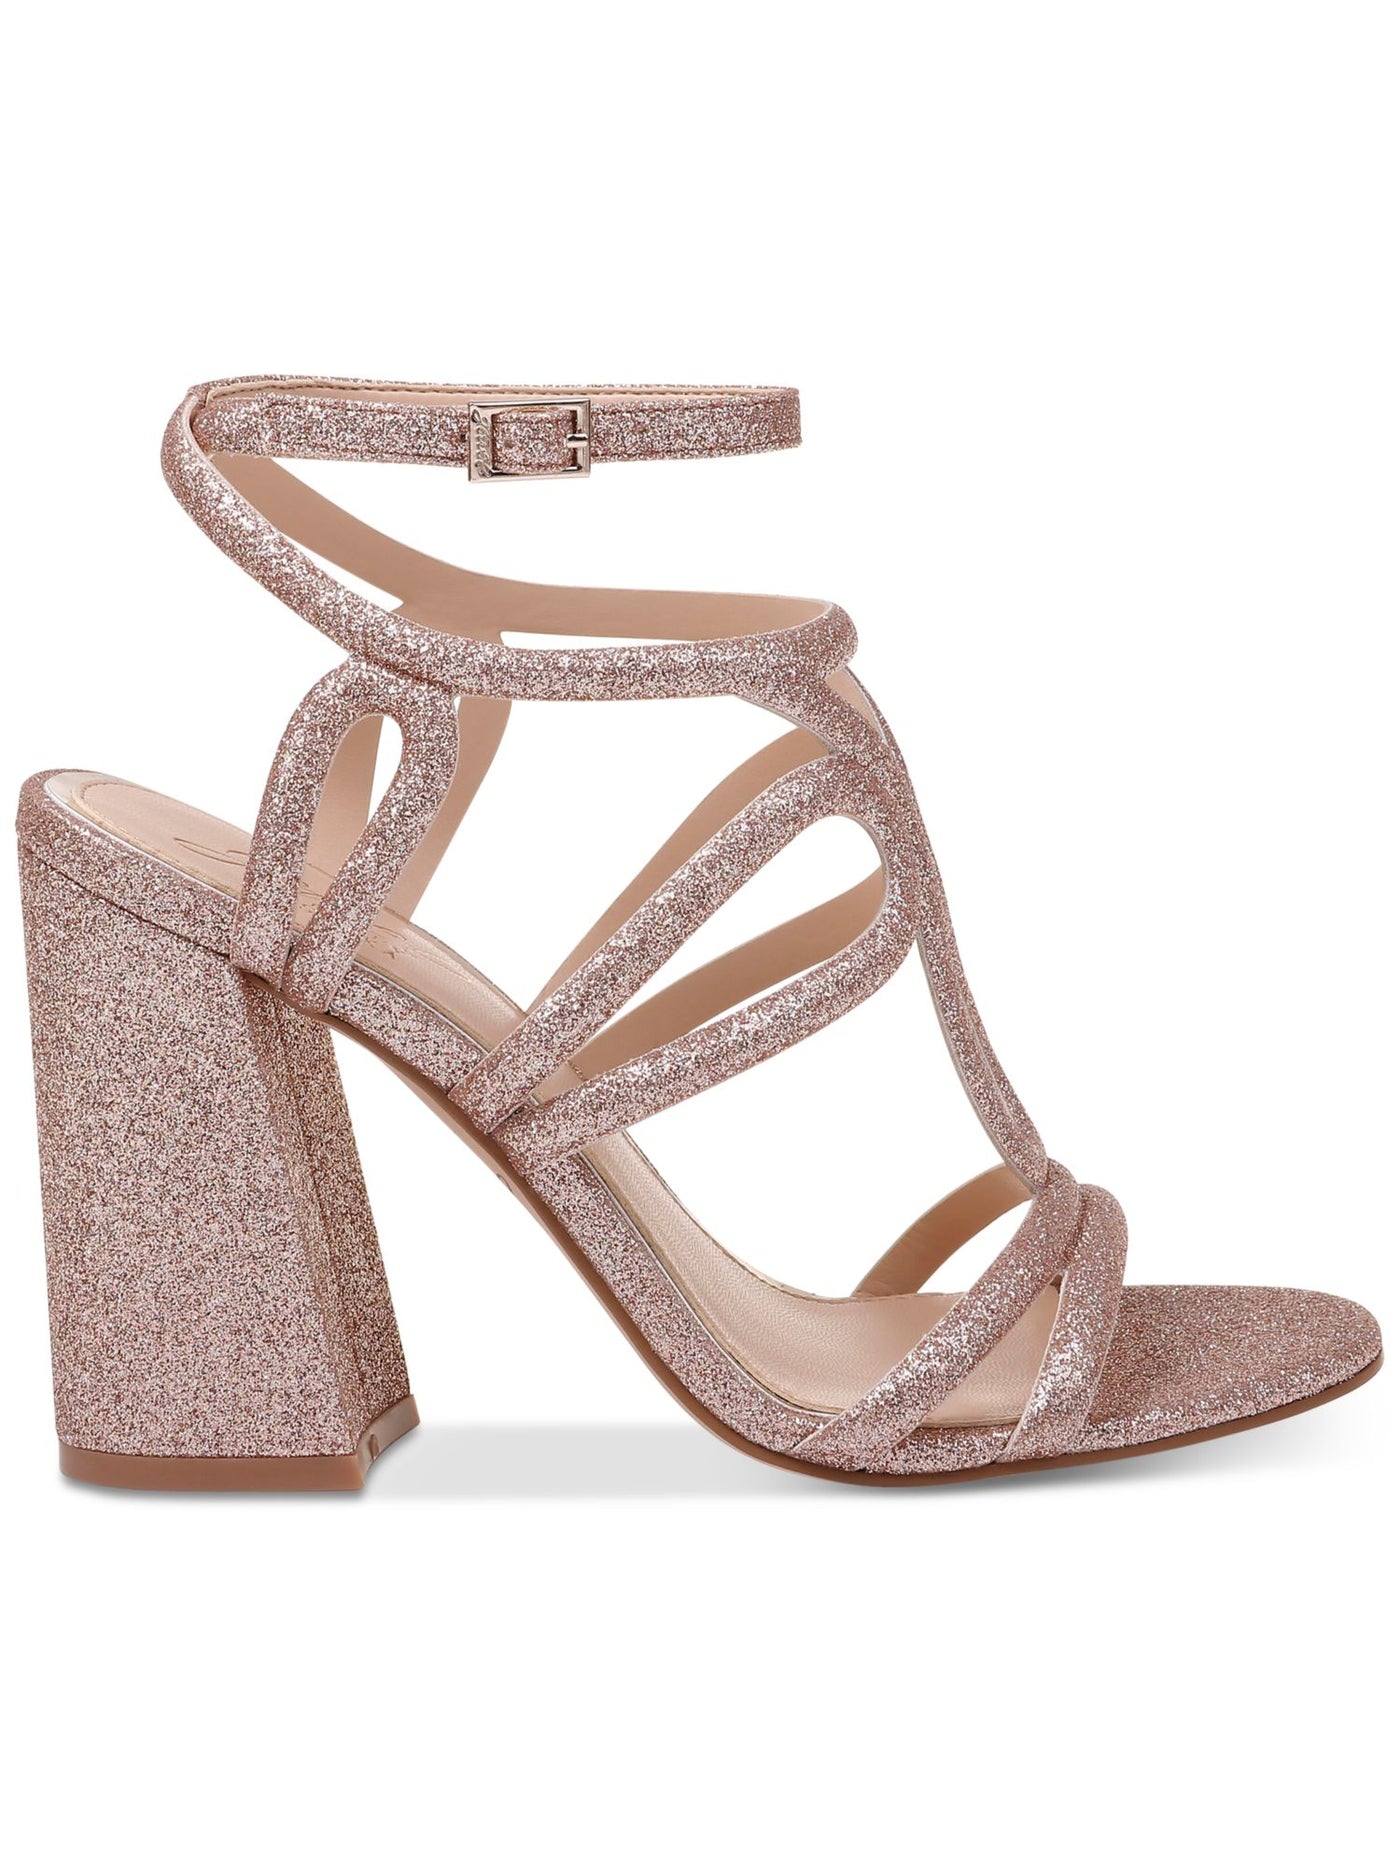 JEWEL BADGLEY MISCHKA Womens Pink Caged Design Glitter Adjustable Strap Shari Round Toe Block Heel Buckle Dress Sandals Shoes 9.5